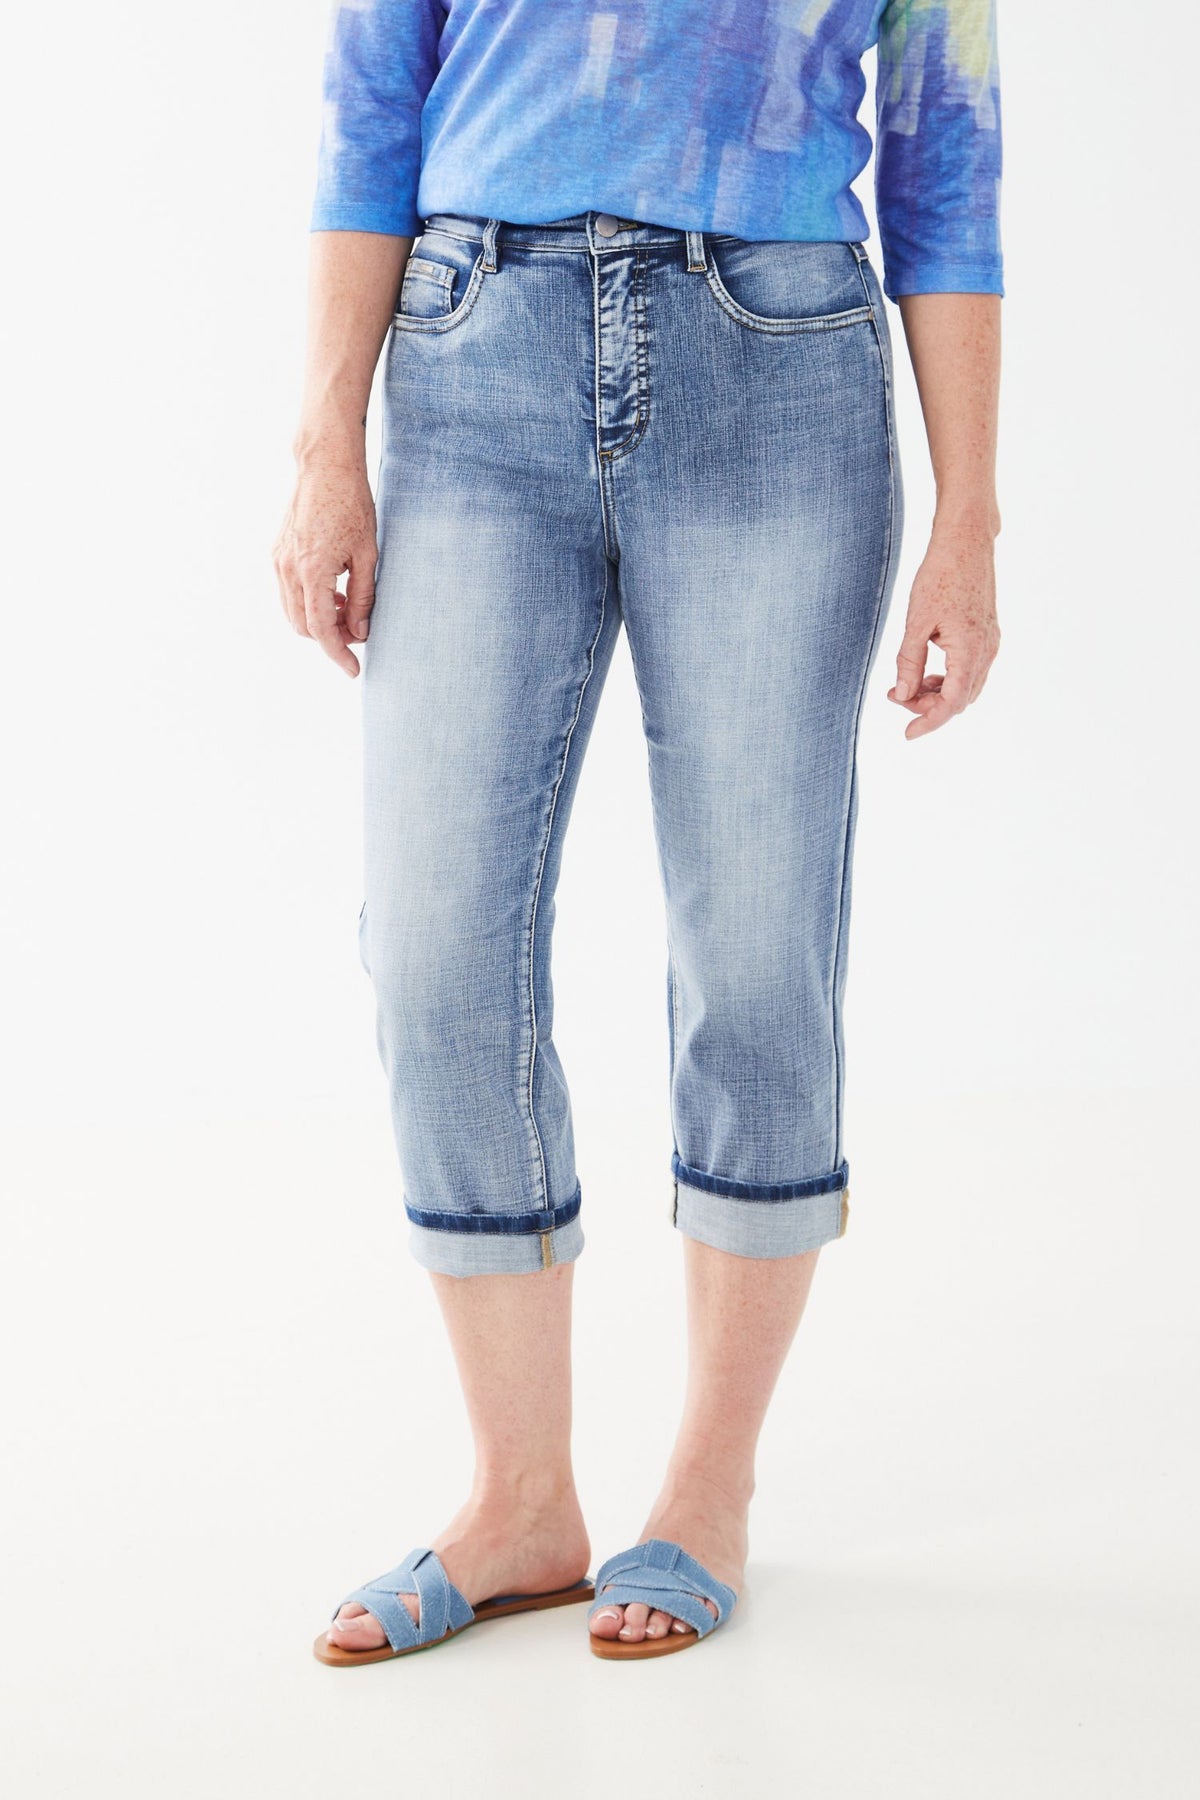 FDJ Suzanne Capri Jeans - Style 6816809, front